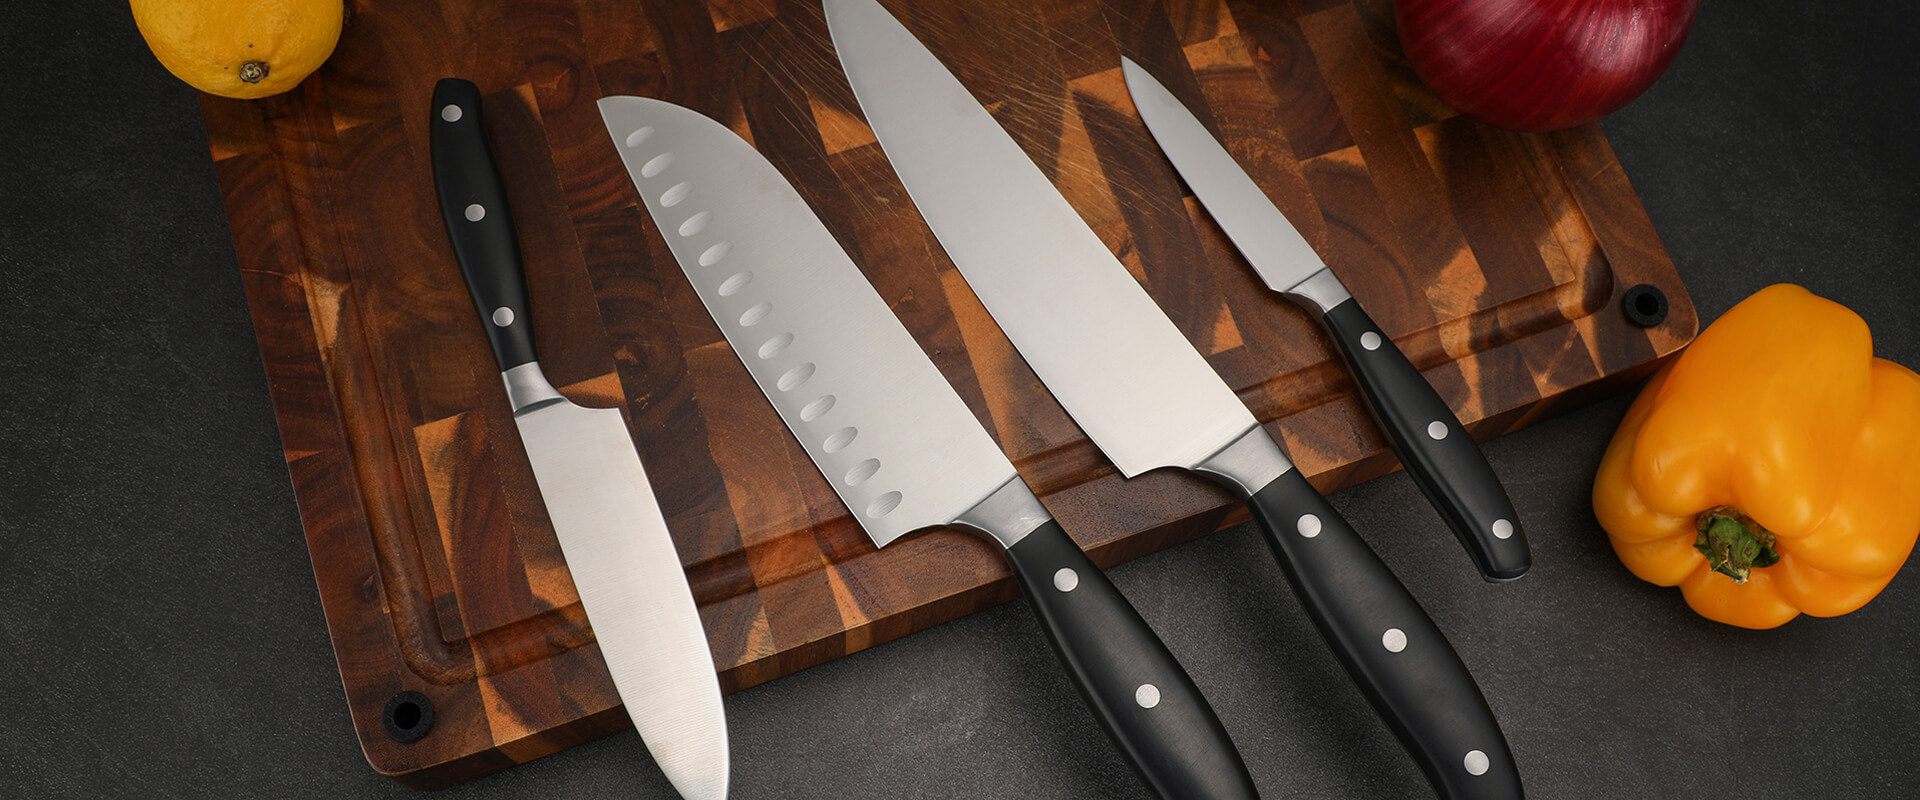 YangJiang Professional Manual Kitchen Knives Sharpening Tool Salad Scissor  - Buy YangJiang Professional Manual Kitchen Knives Sharpening Tool Salad  Scissor Product on